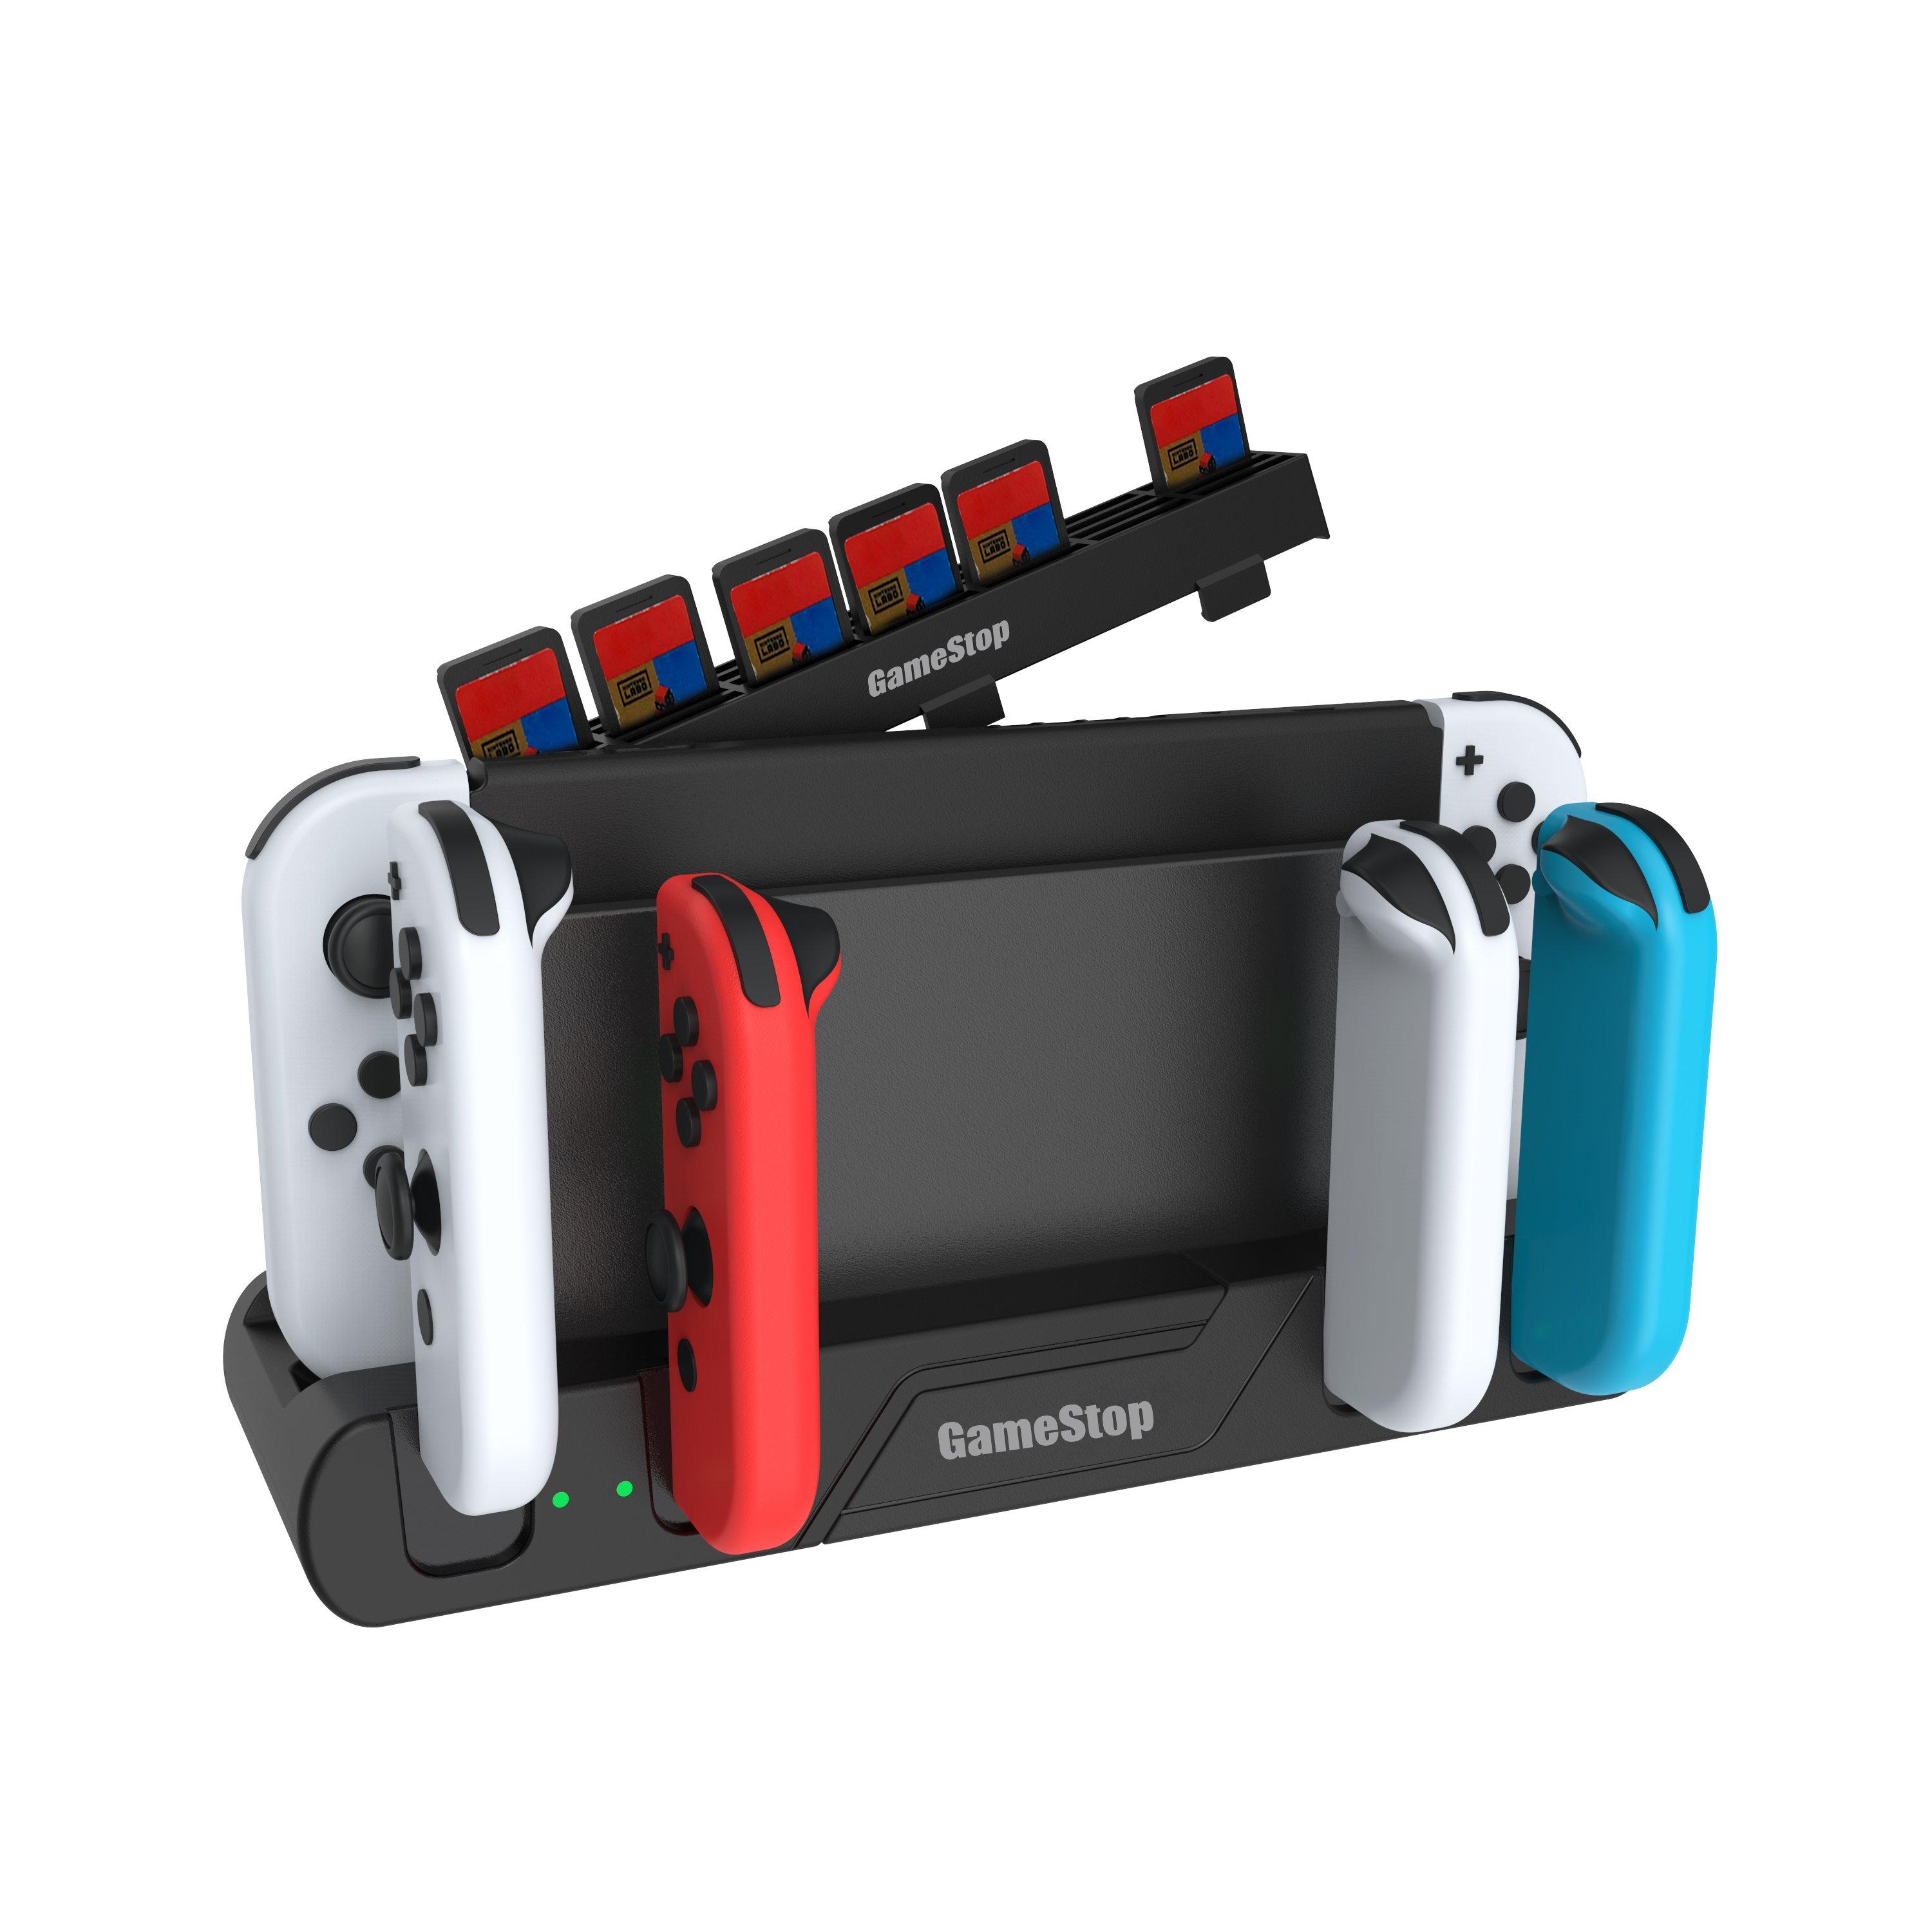 GameStop AC Adapter for Nintendo Switch